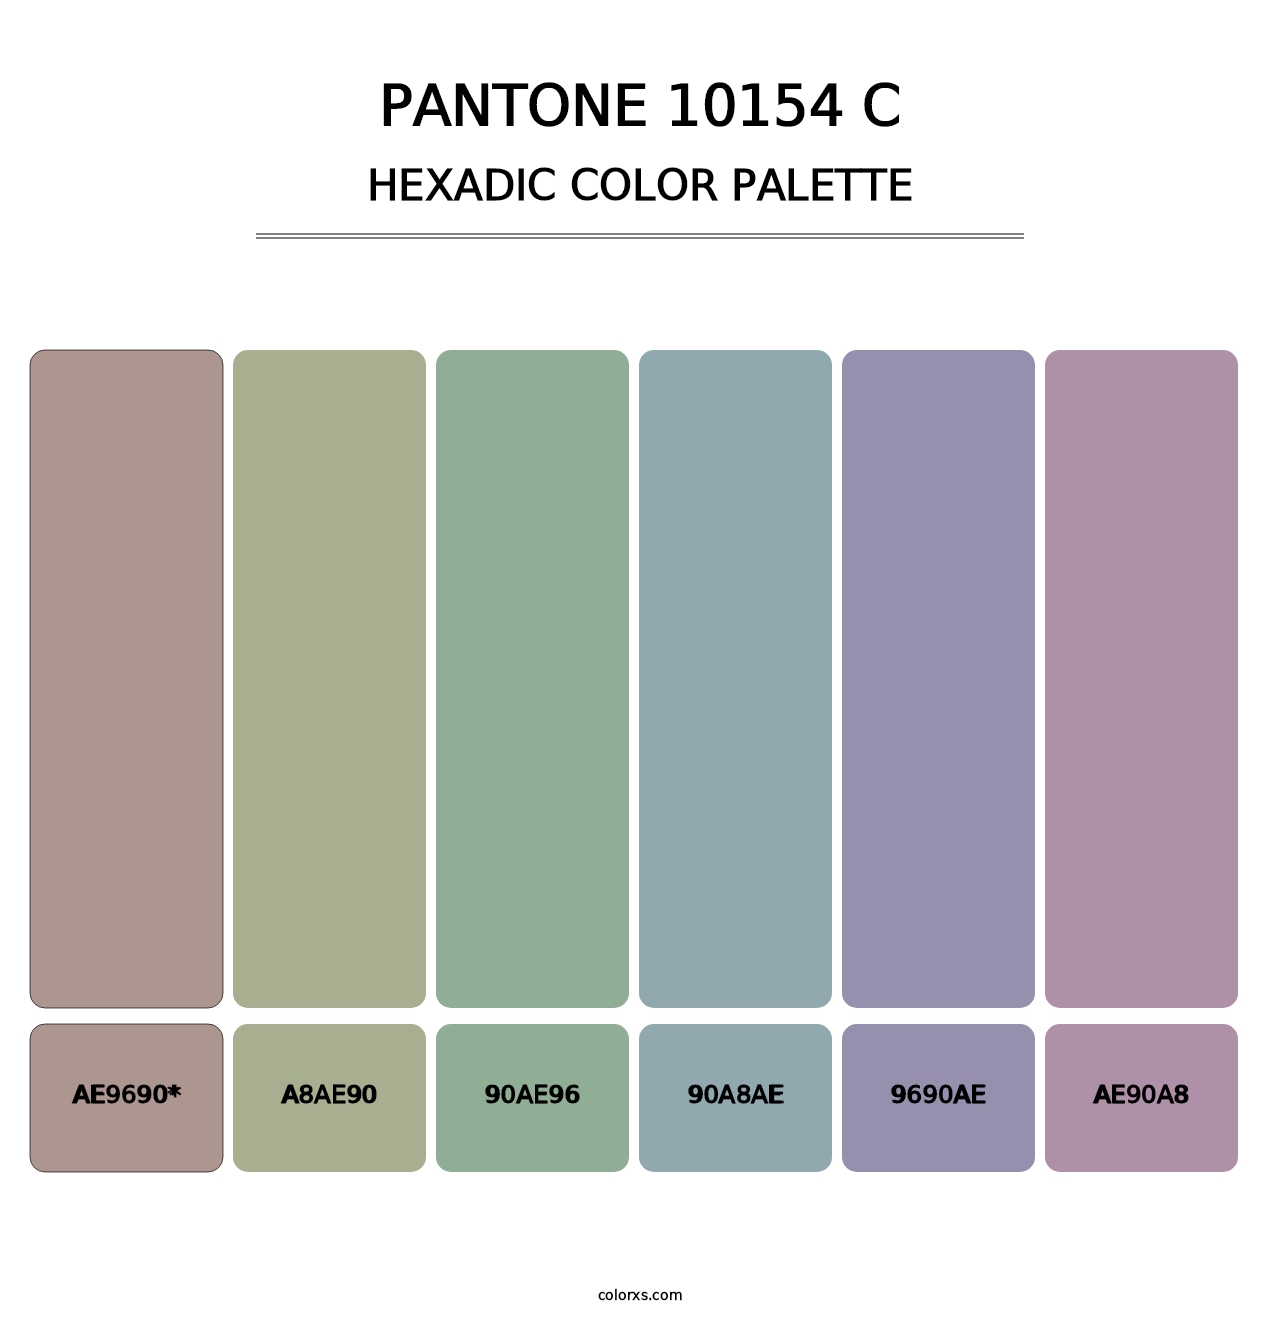 PANTONE 10154 C - Hexadic Color Palette